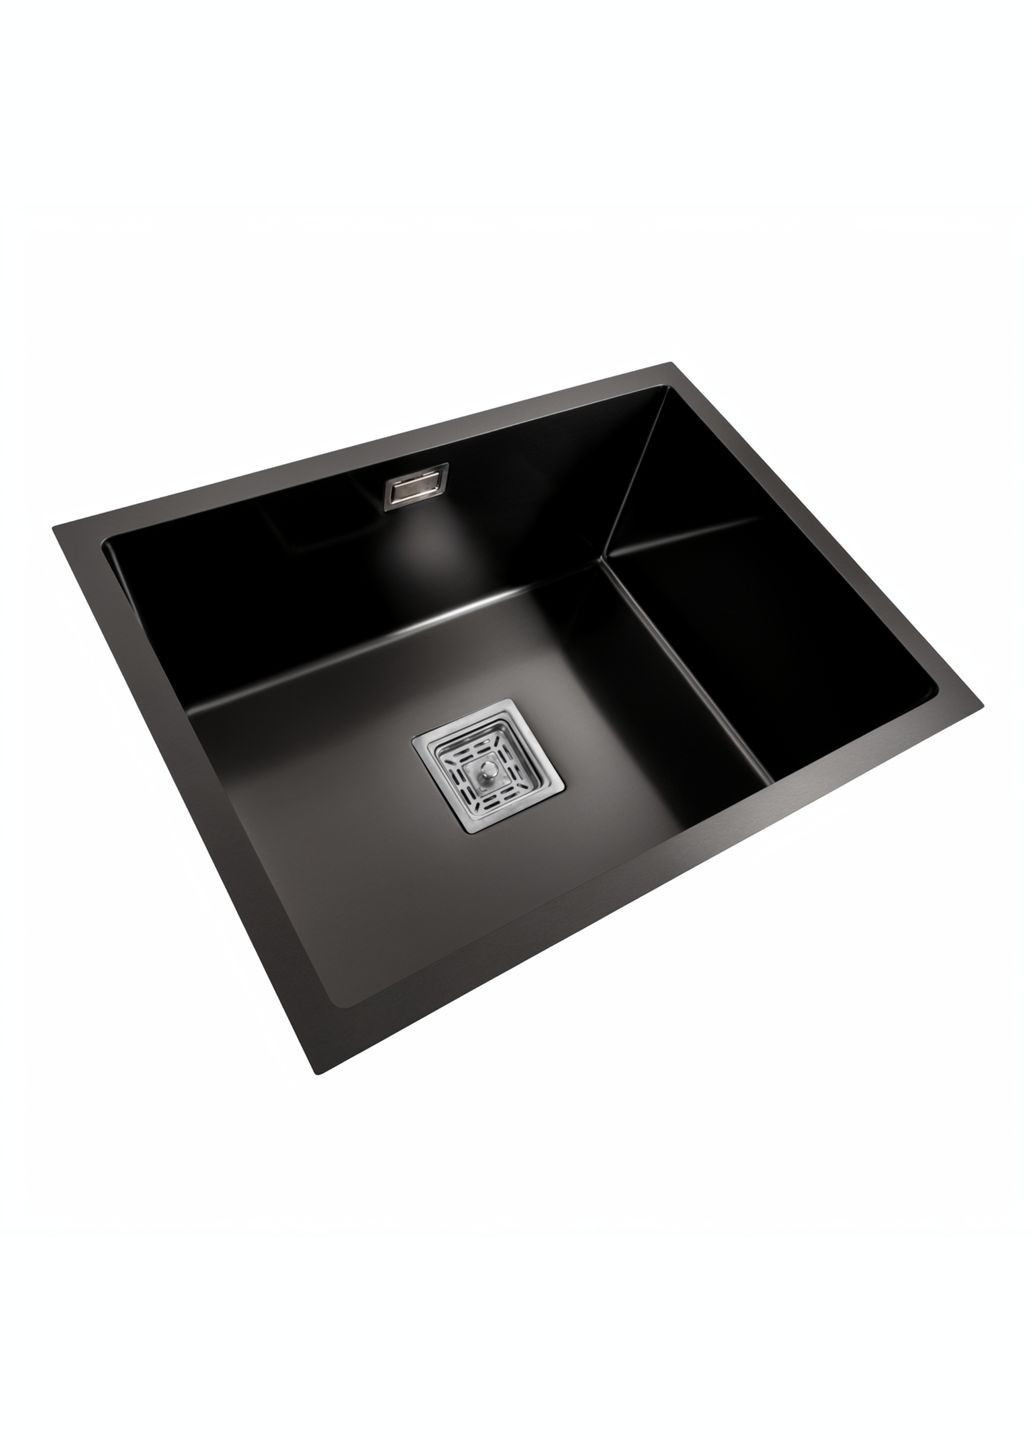 Кухонная мойка Handmade PVD 58*43 черная монтаж под столешницу HSB (квадратный сифон 3,0/1,0) Platinum (269793364)